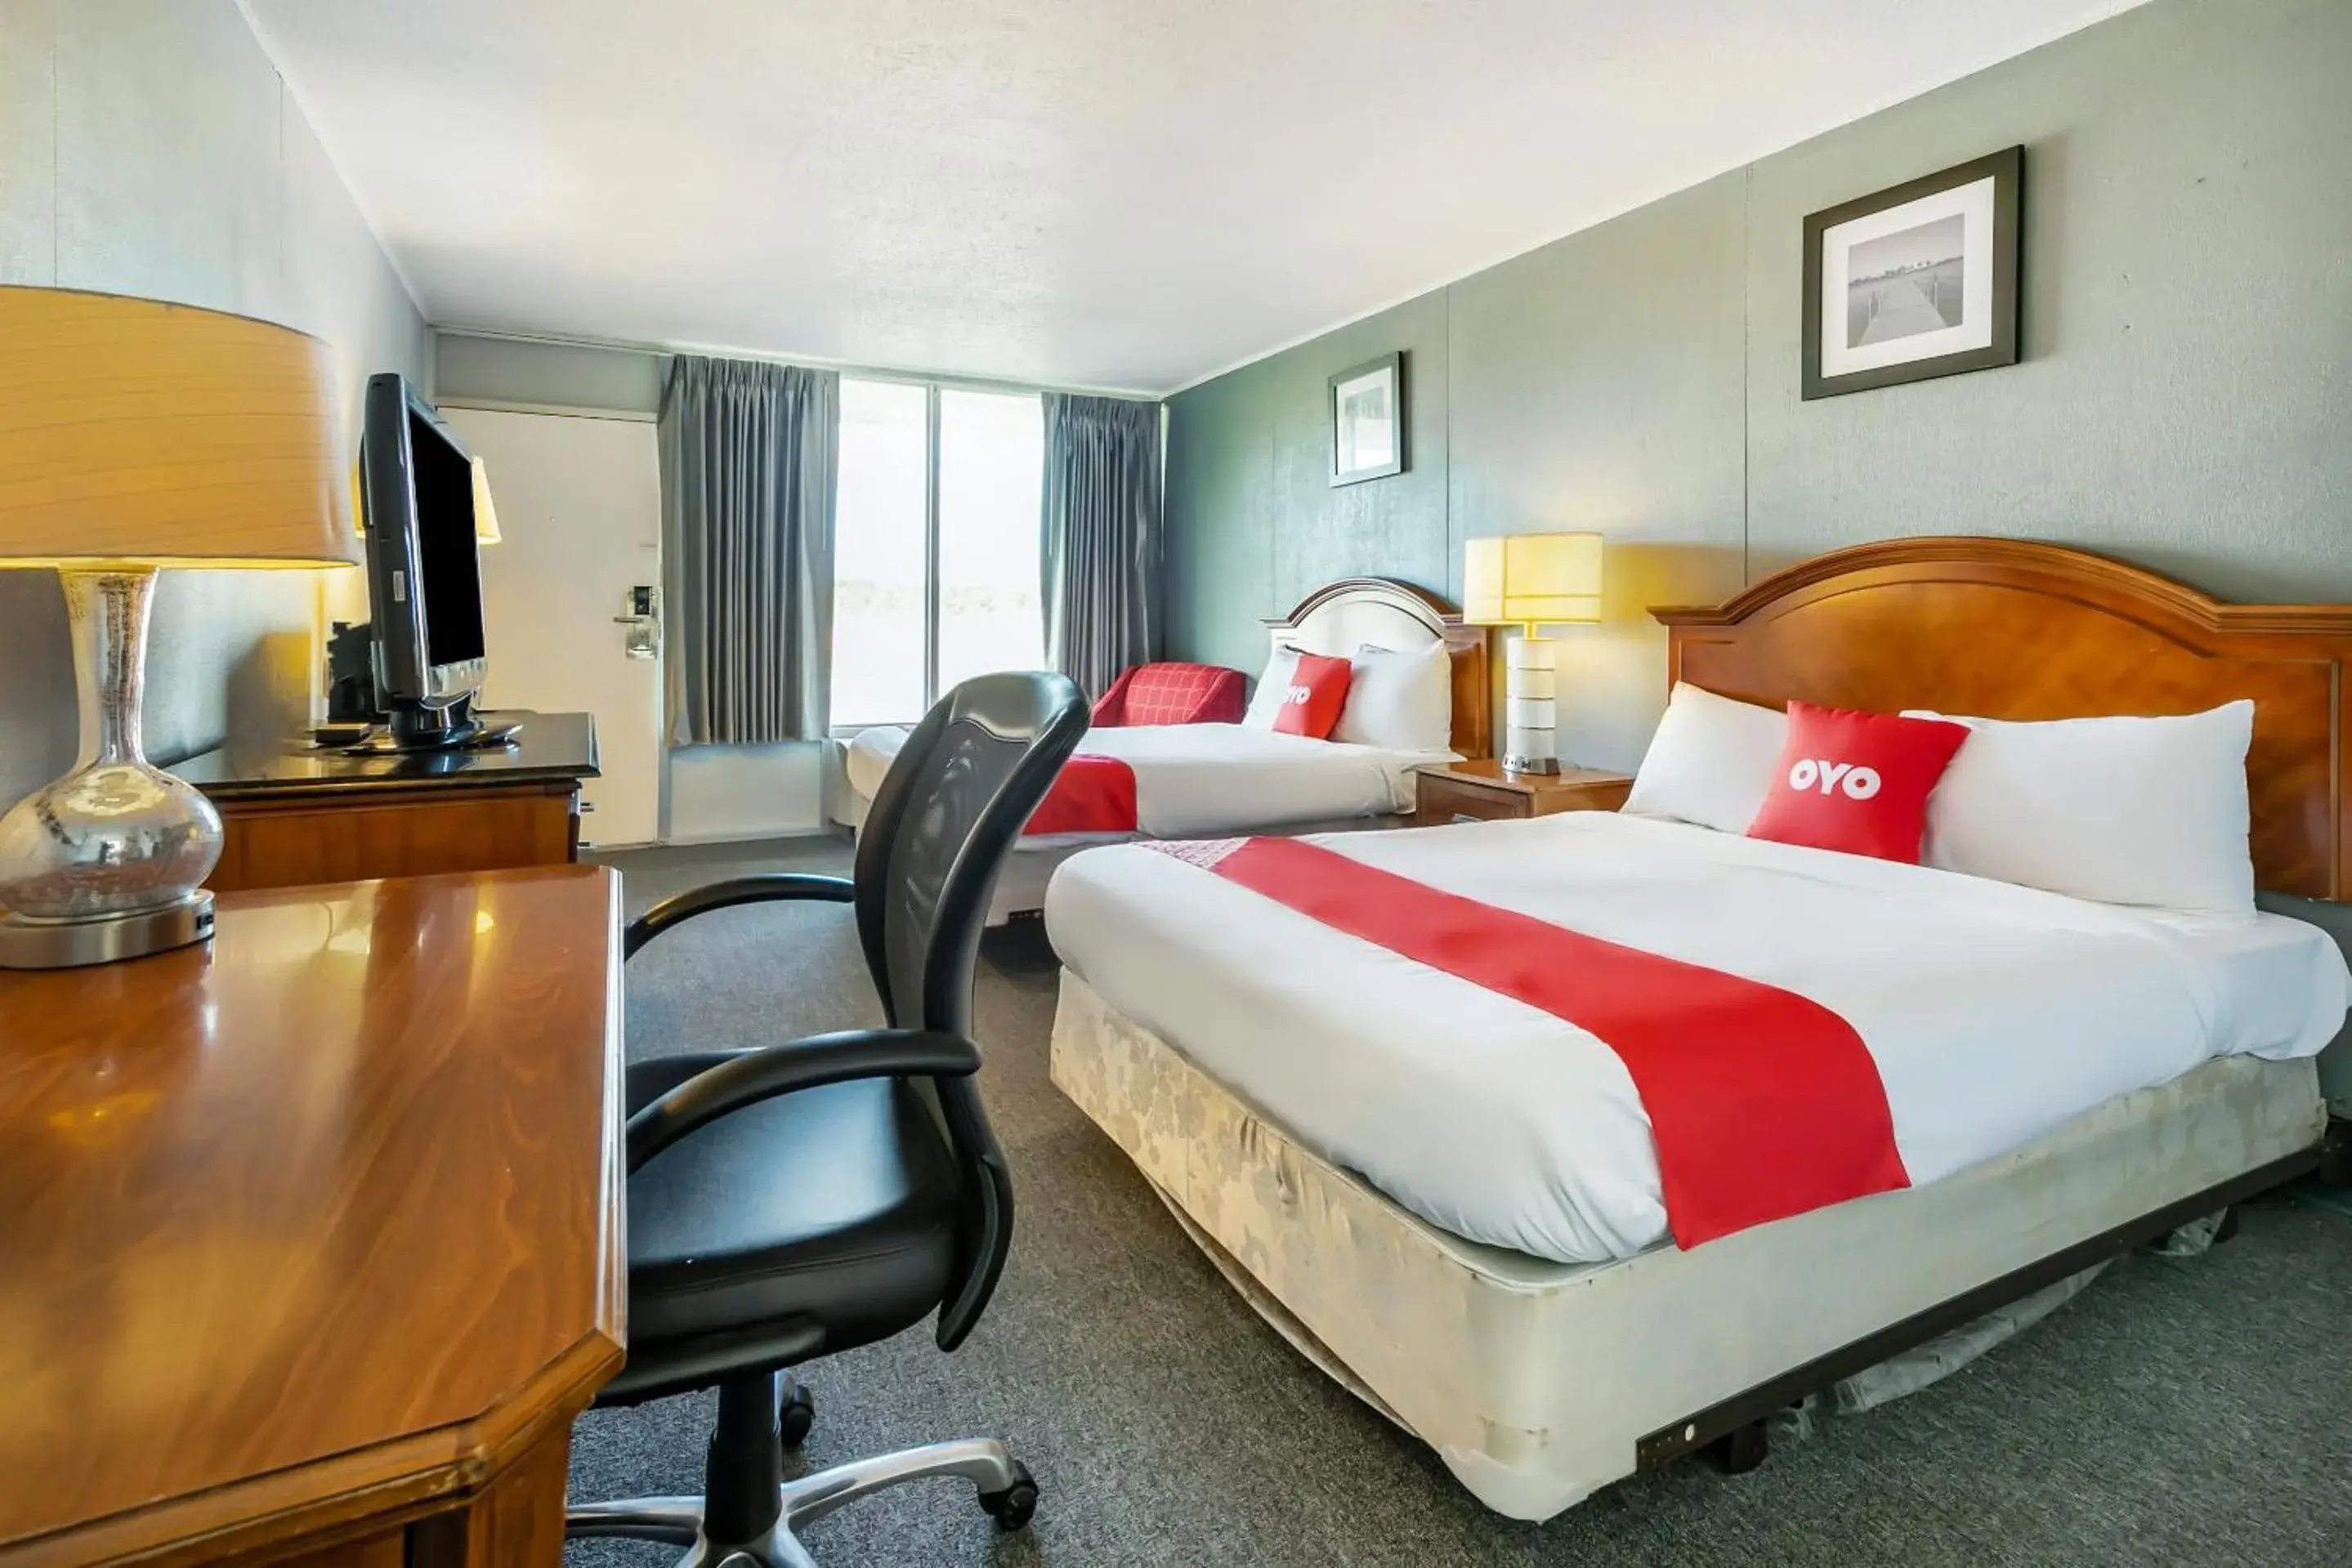 Bedroom, Room Photo in OYO Hotel Jennings I-10